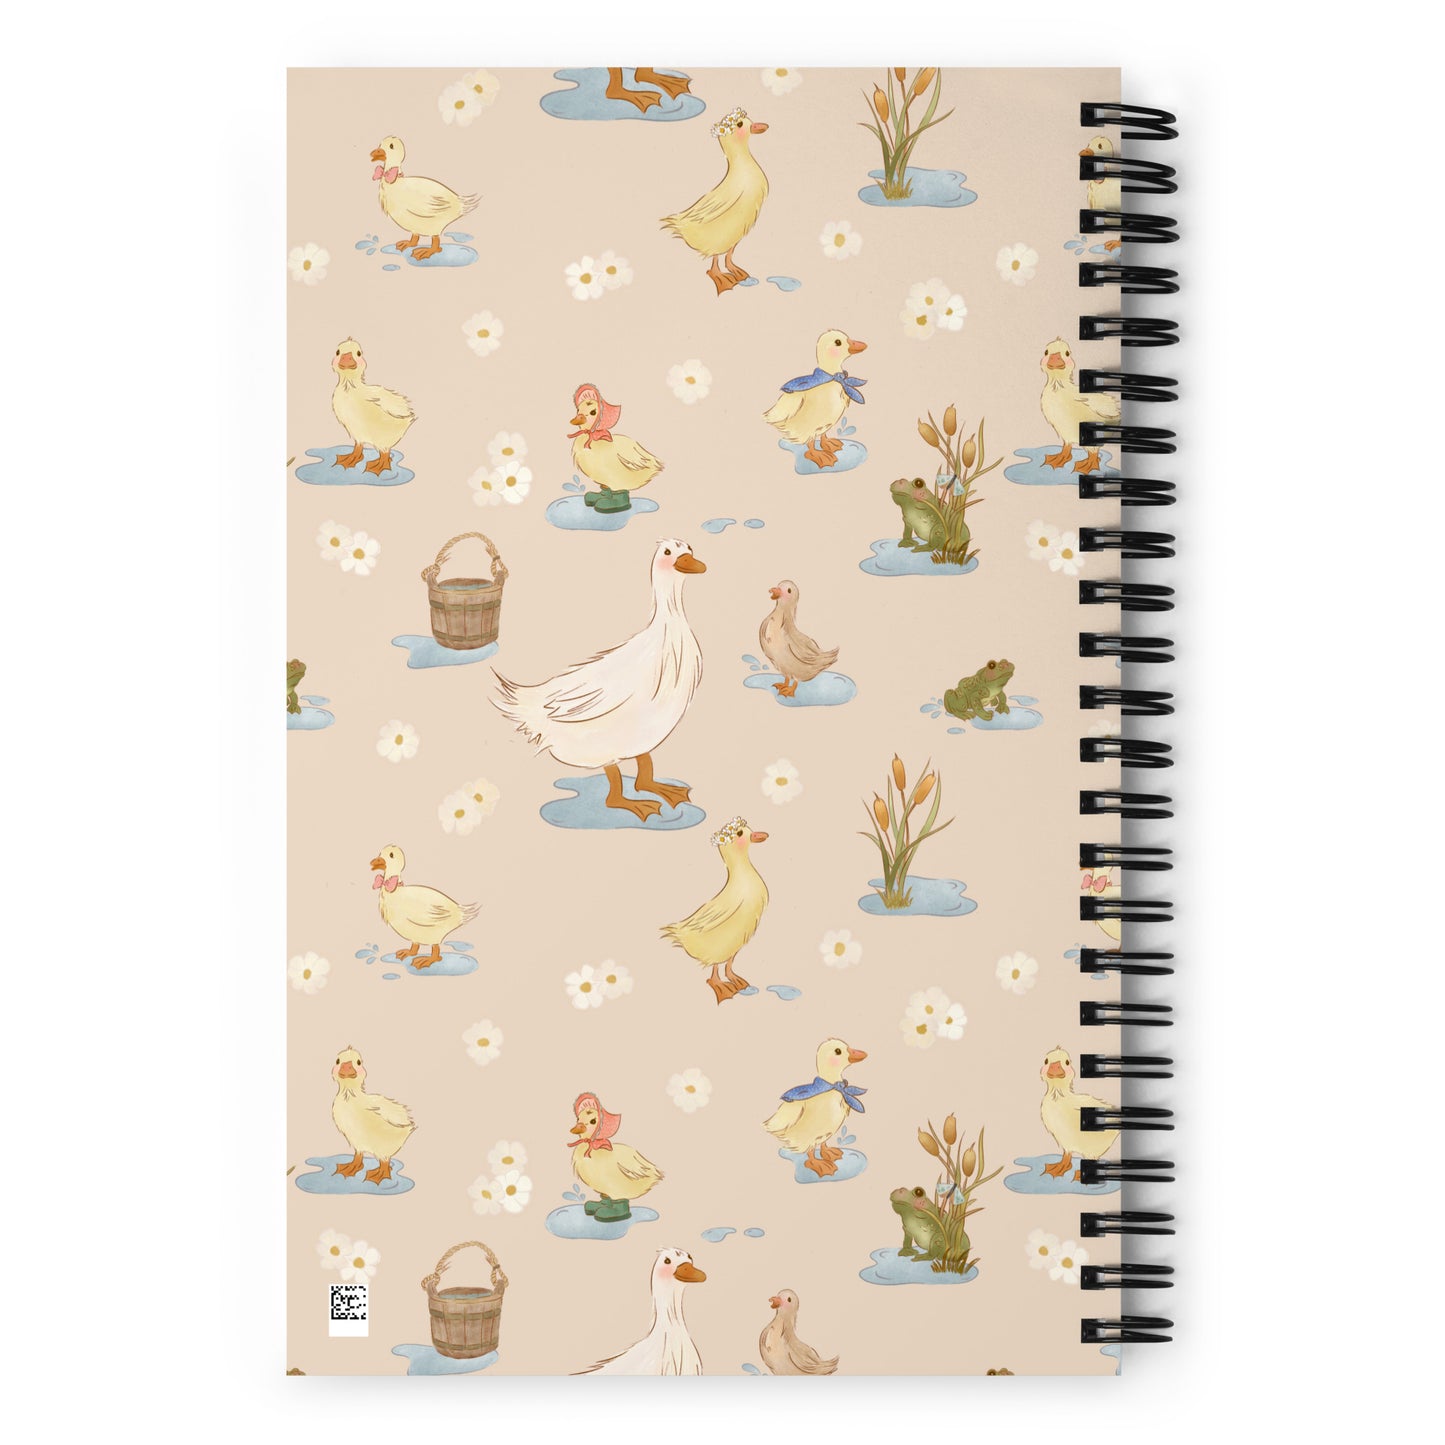 Puddle Ducks : Spiral Notebook